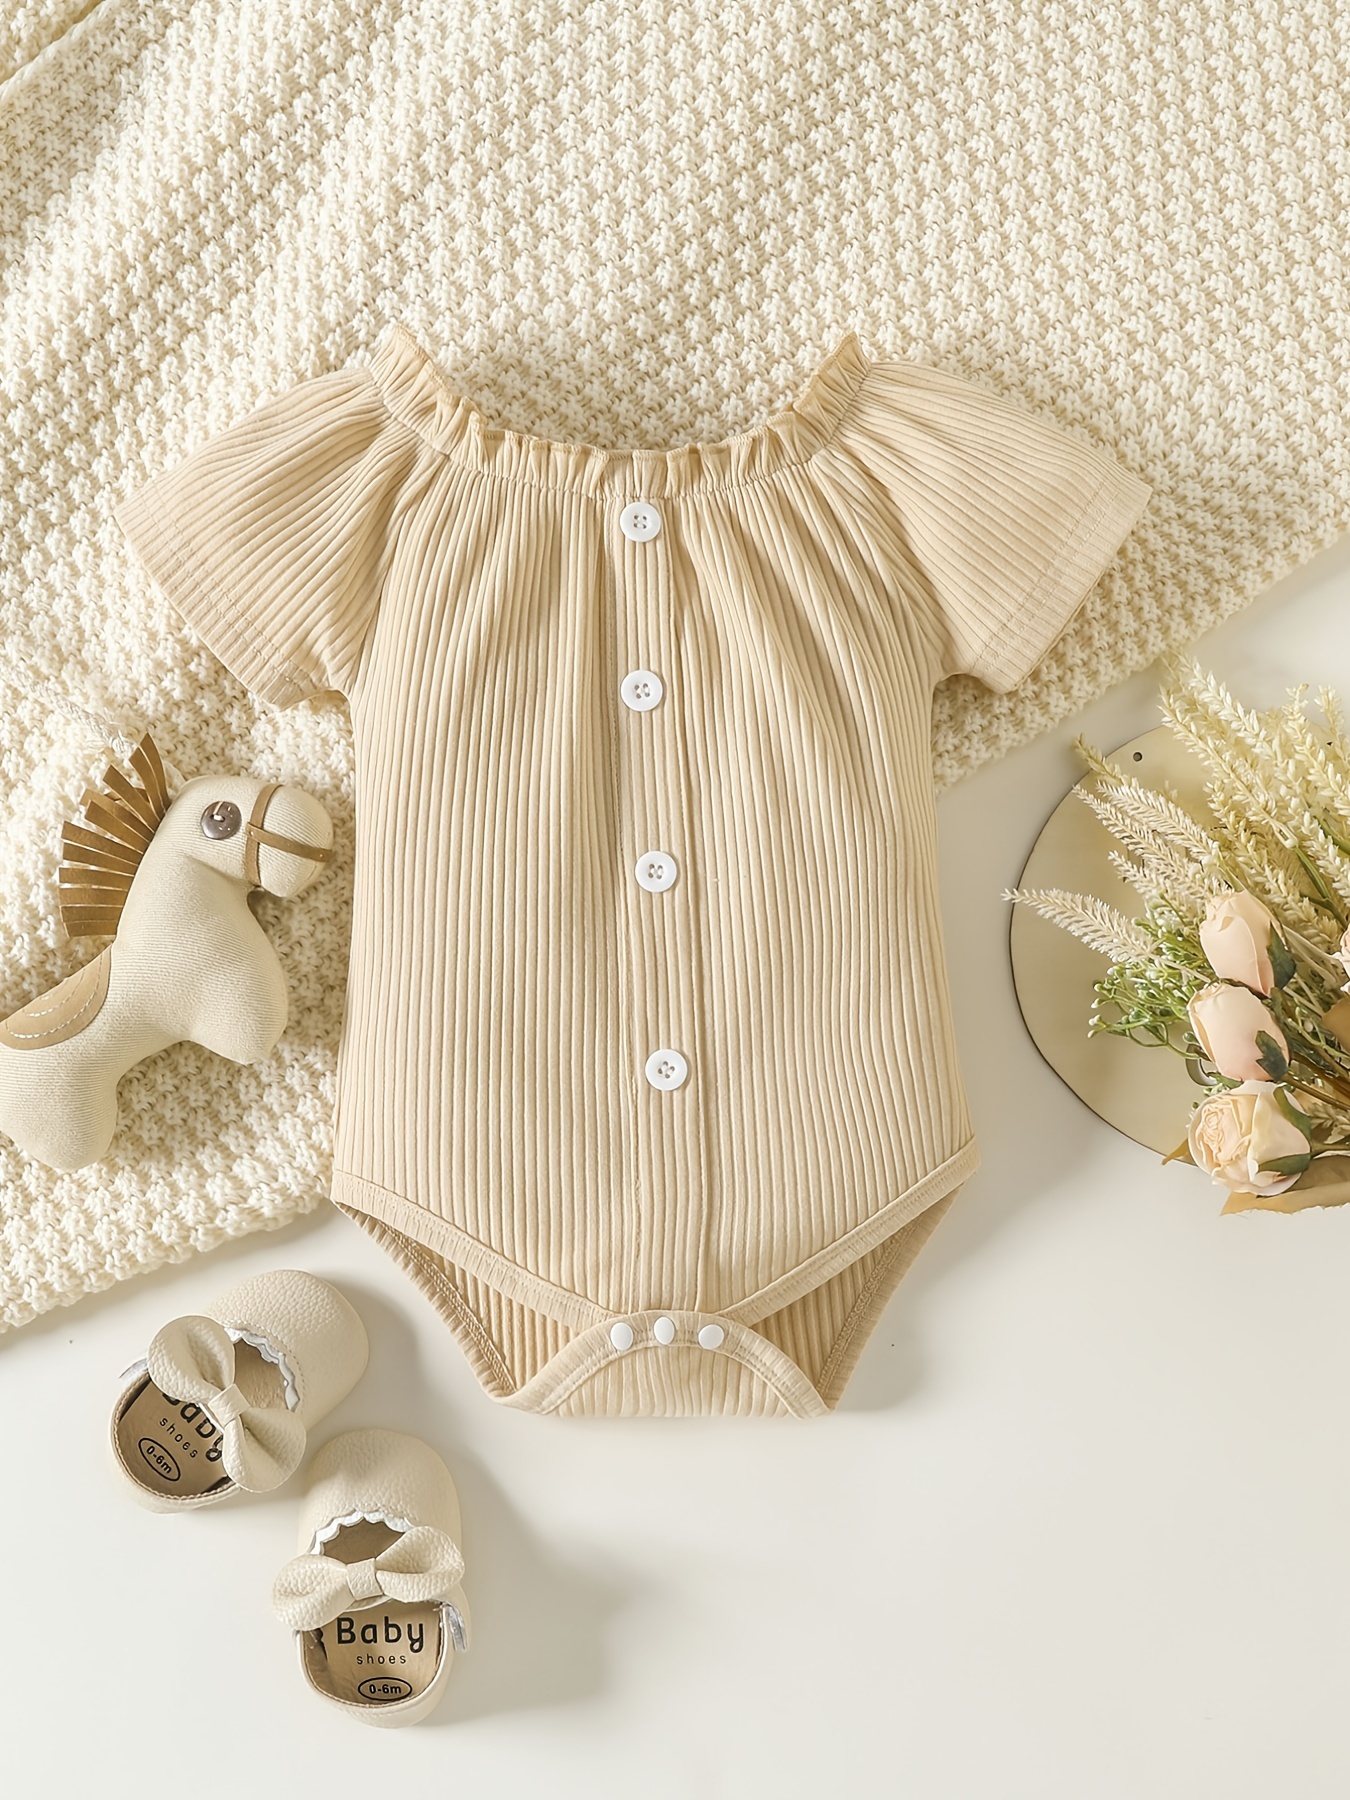 Newborn Baby Girl Clothes Set Ruffle Short Sleeve Romper Floral